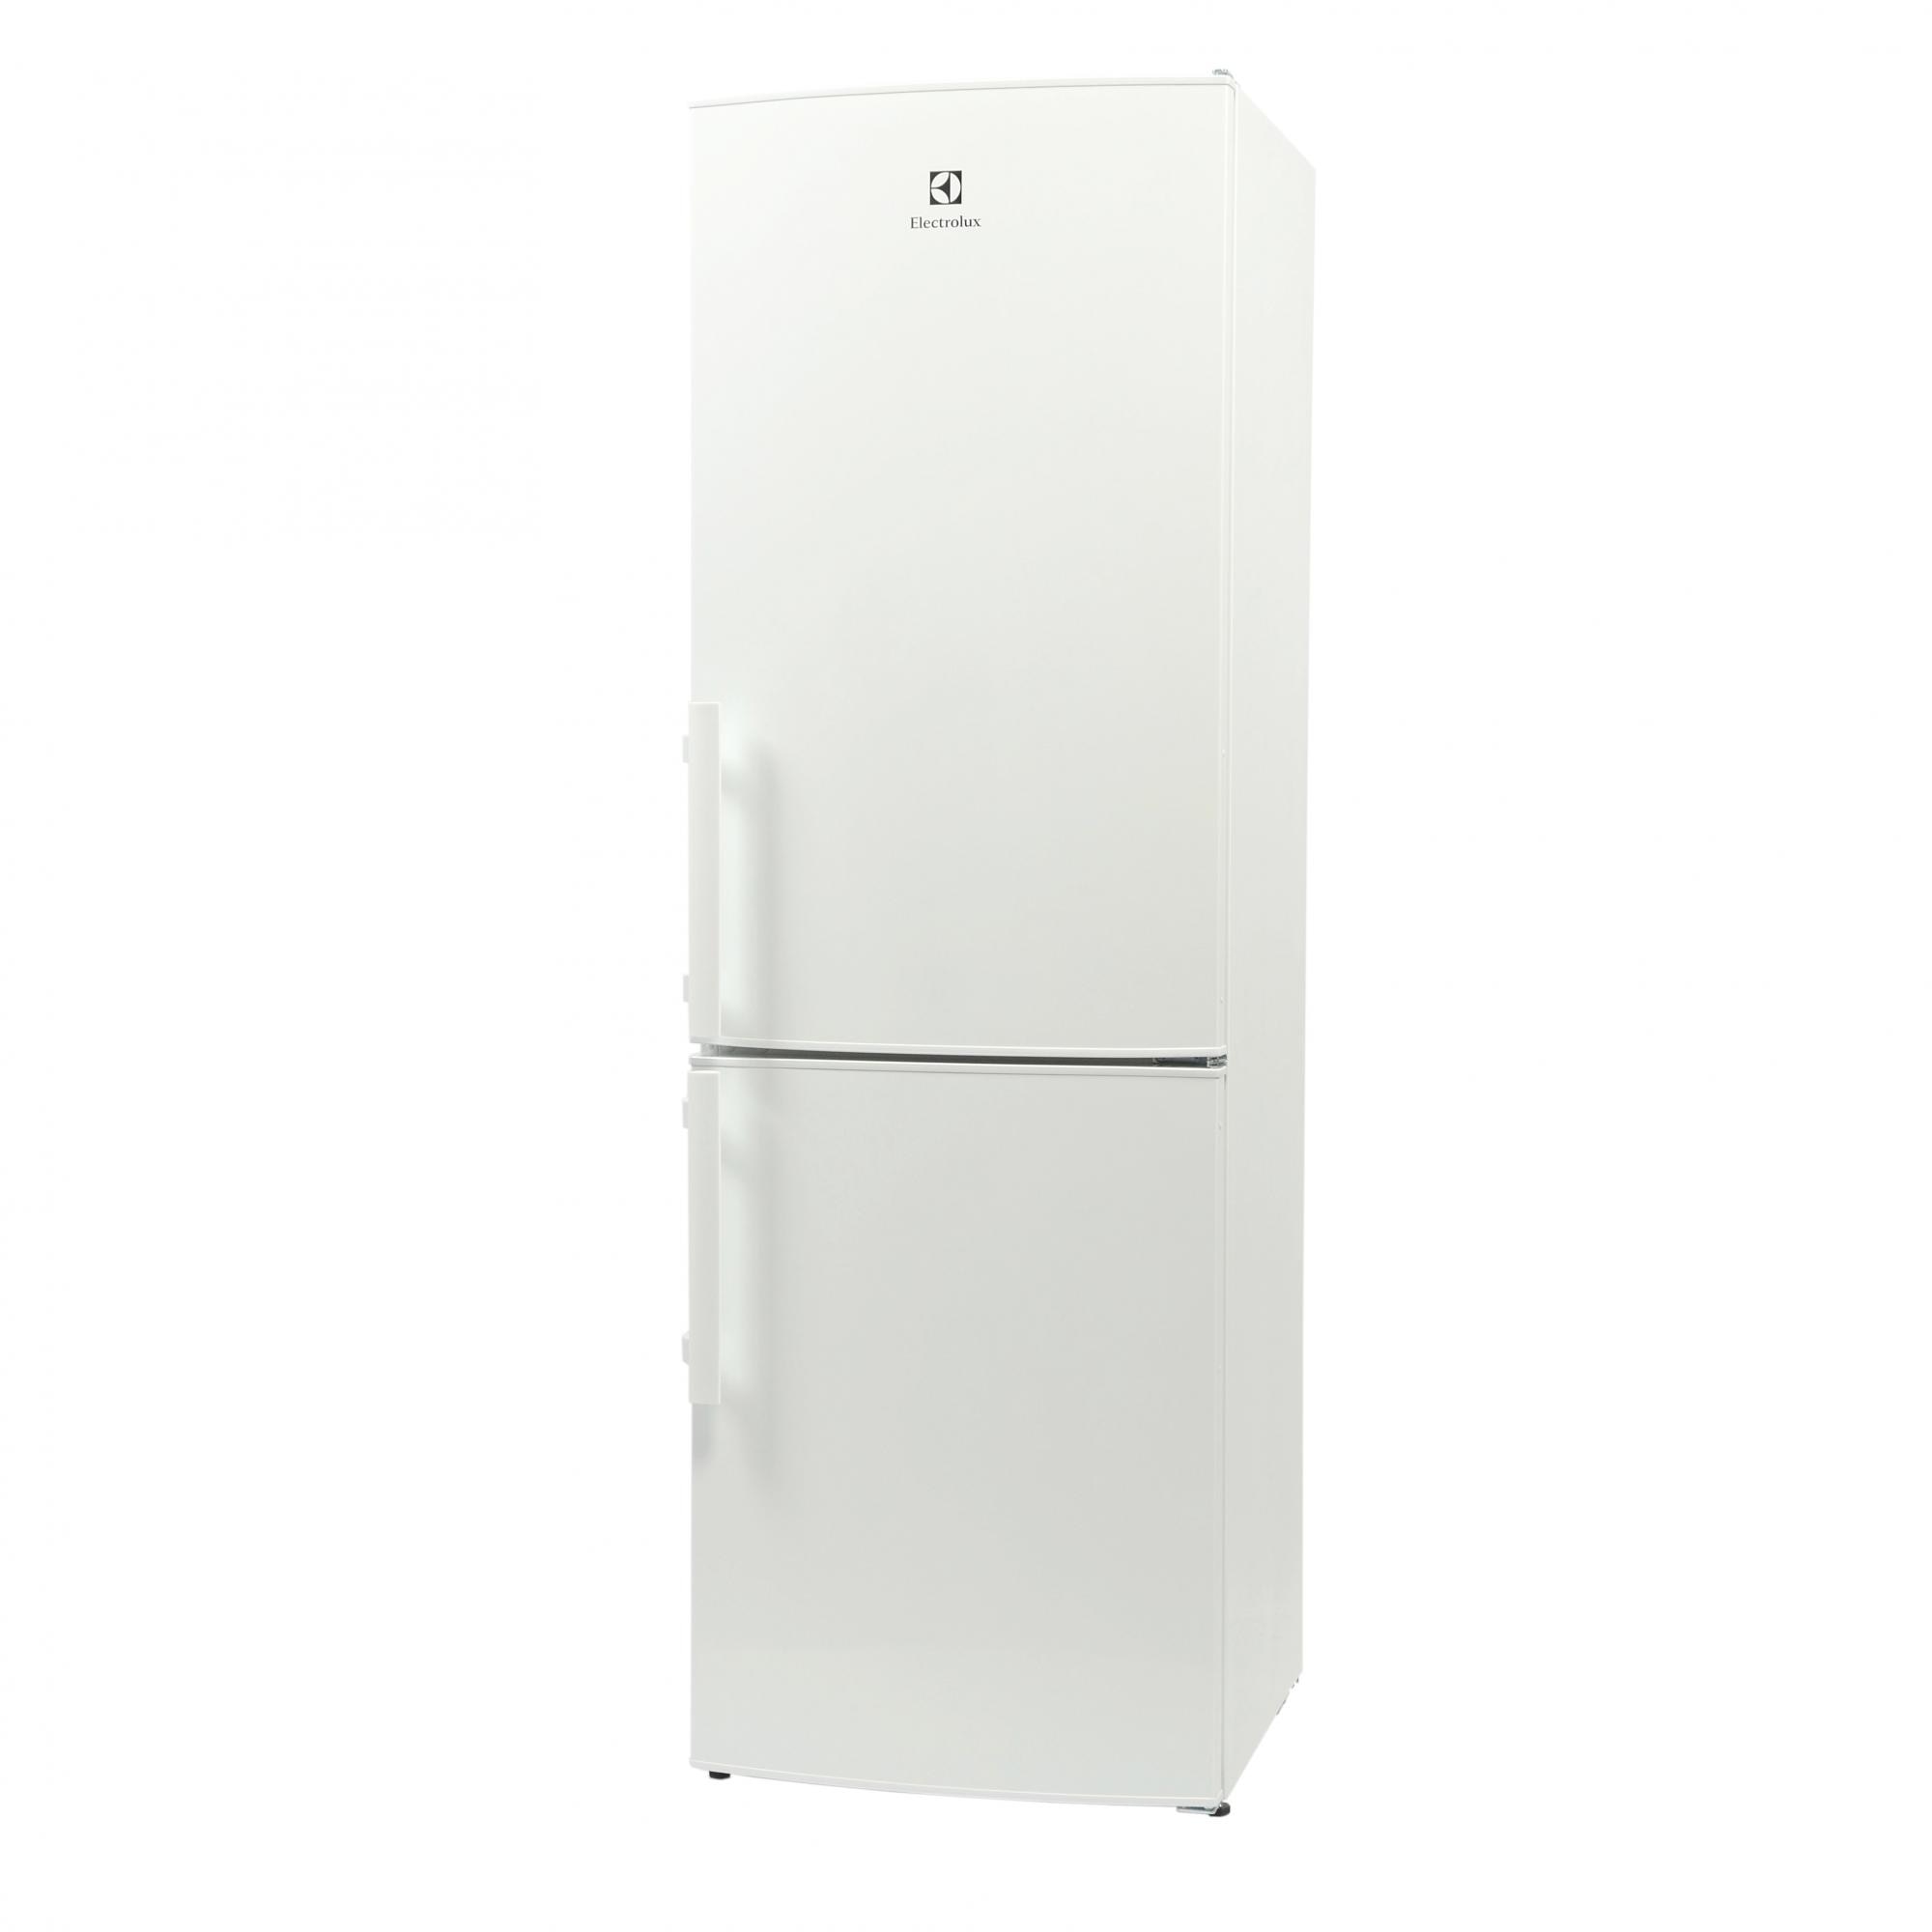 Хладилник Electrolux EN3601MOW с обем от 337 л.